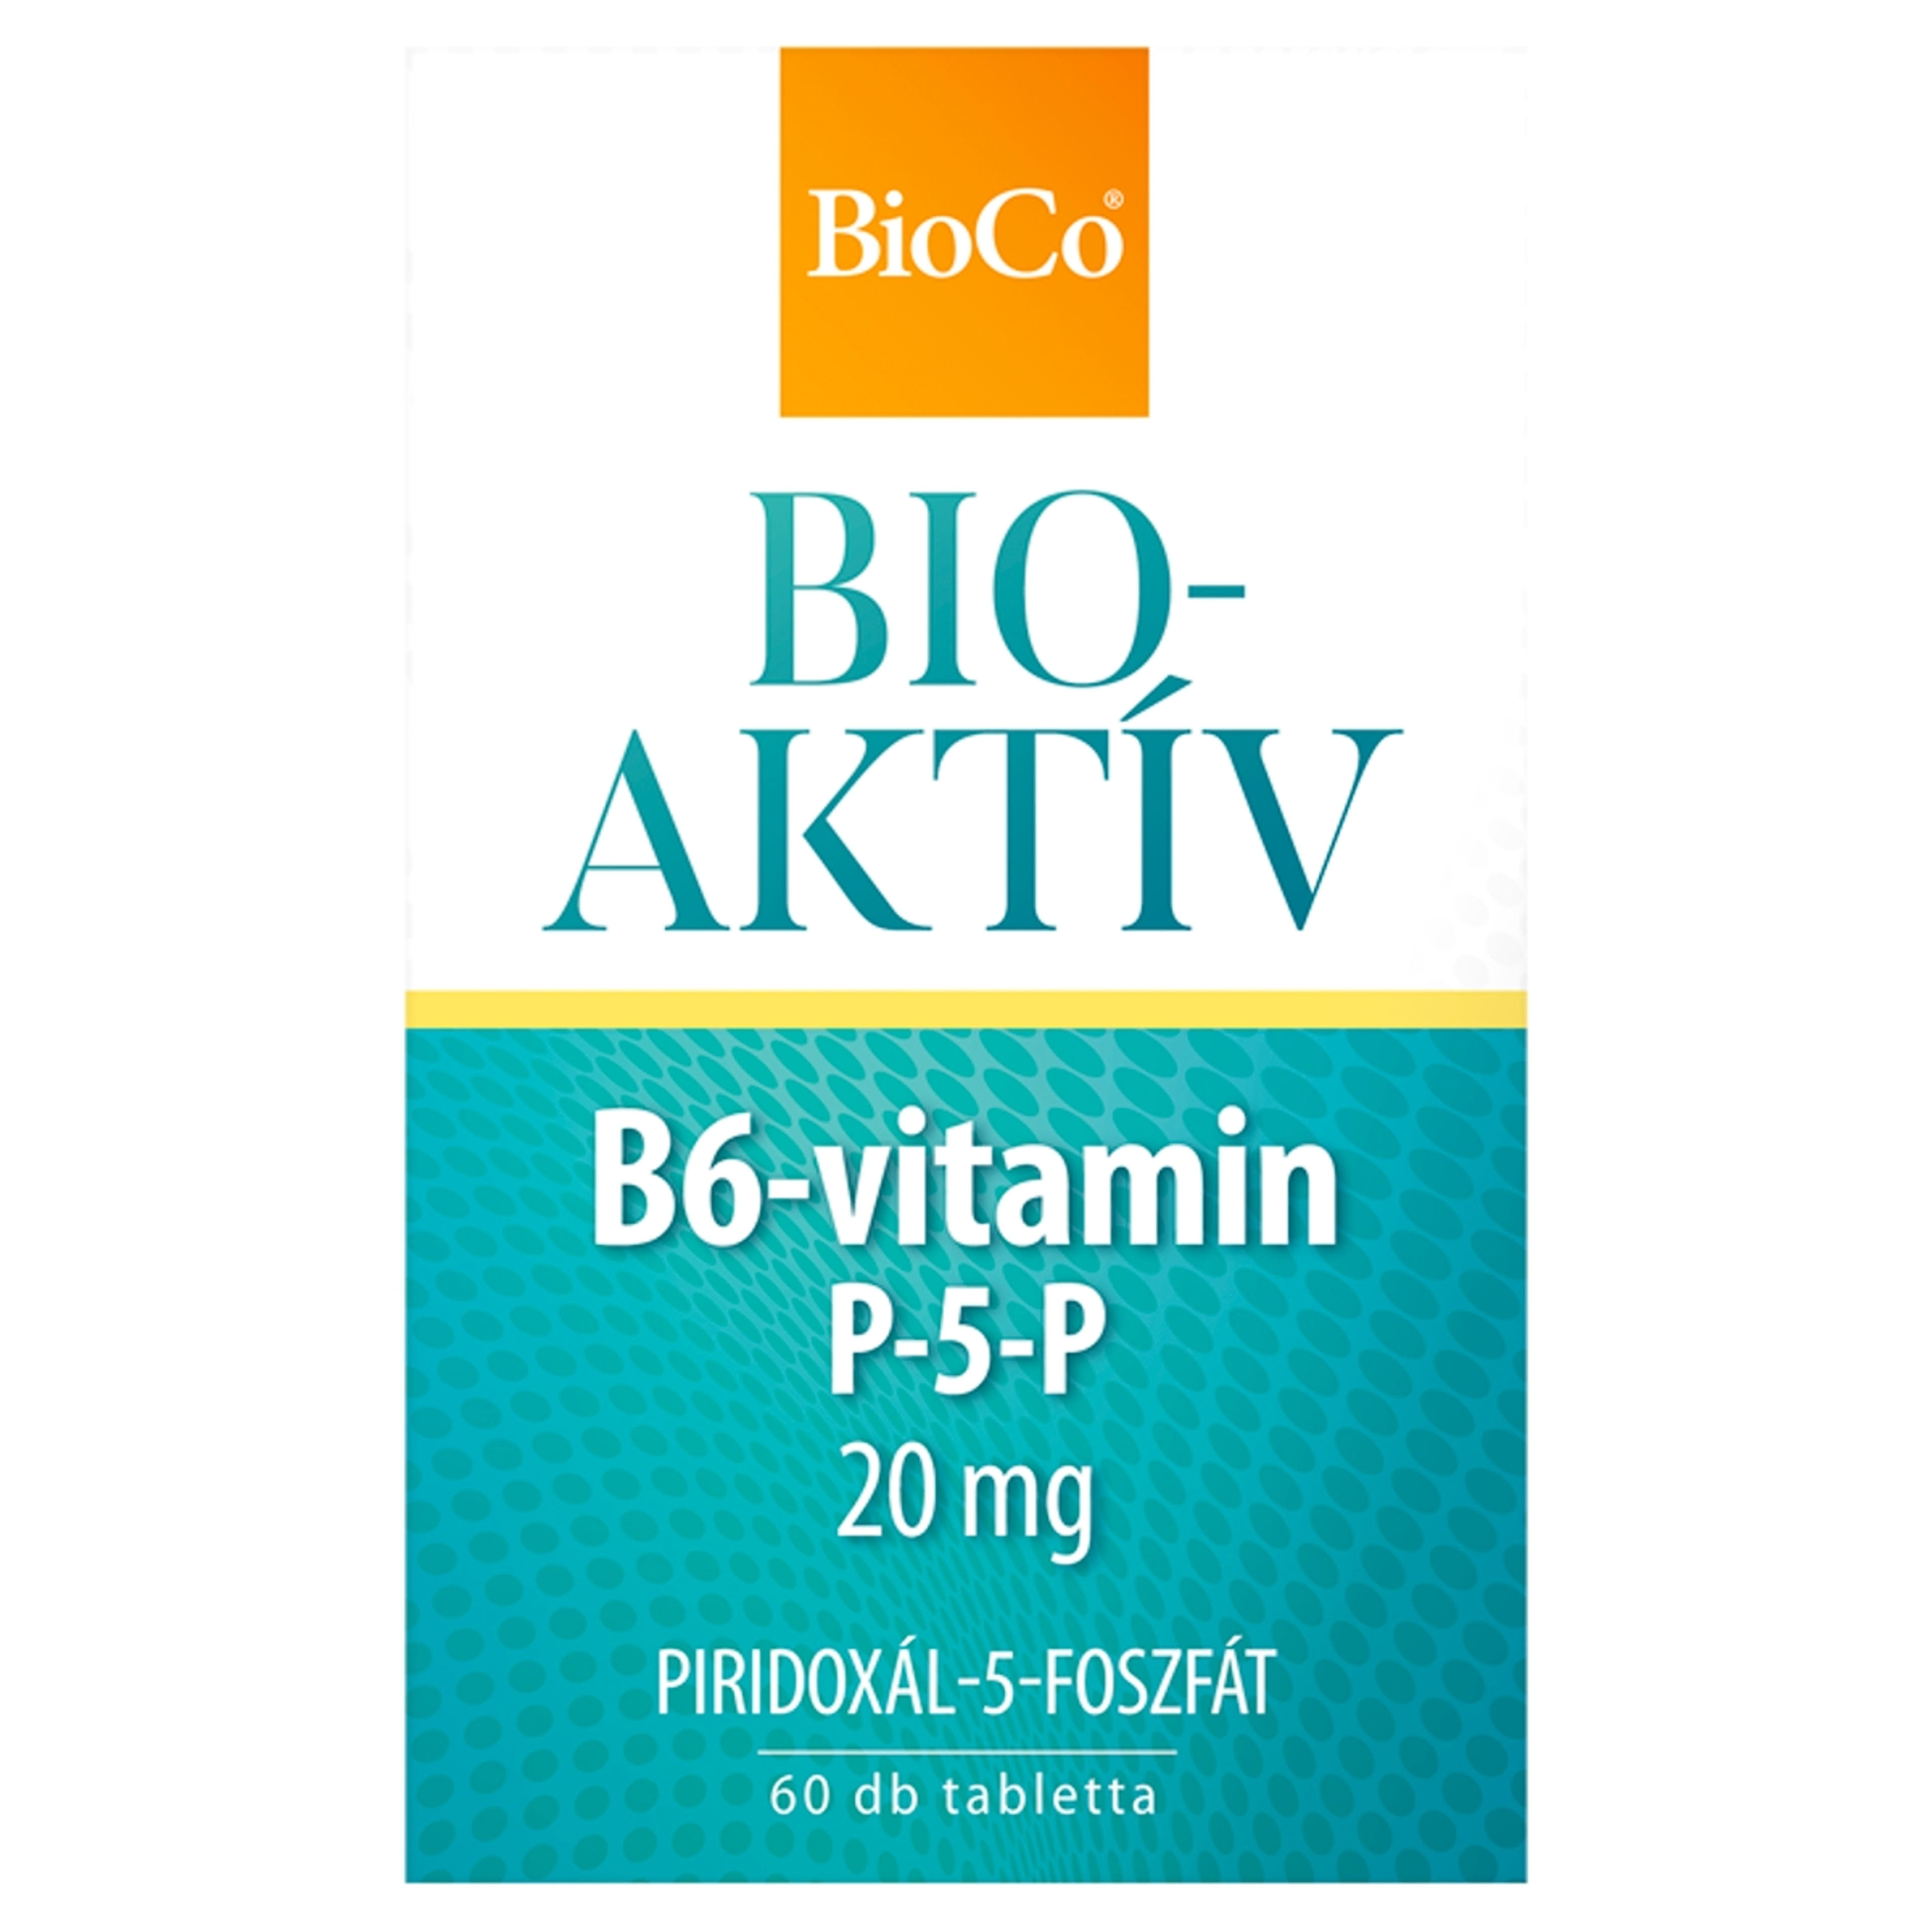 BioCo Bioaktív B6-vitamint P-5-P 20 mg étrend-kiegészítő tabletta - 60 db